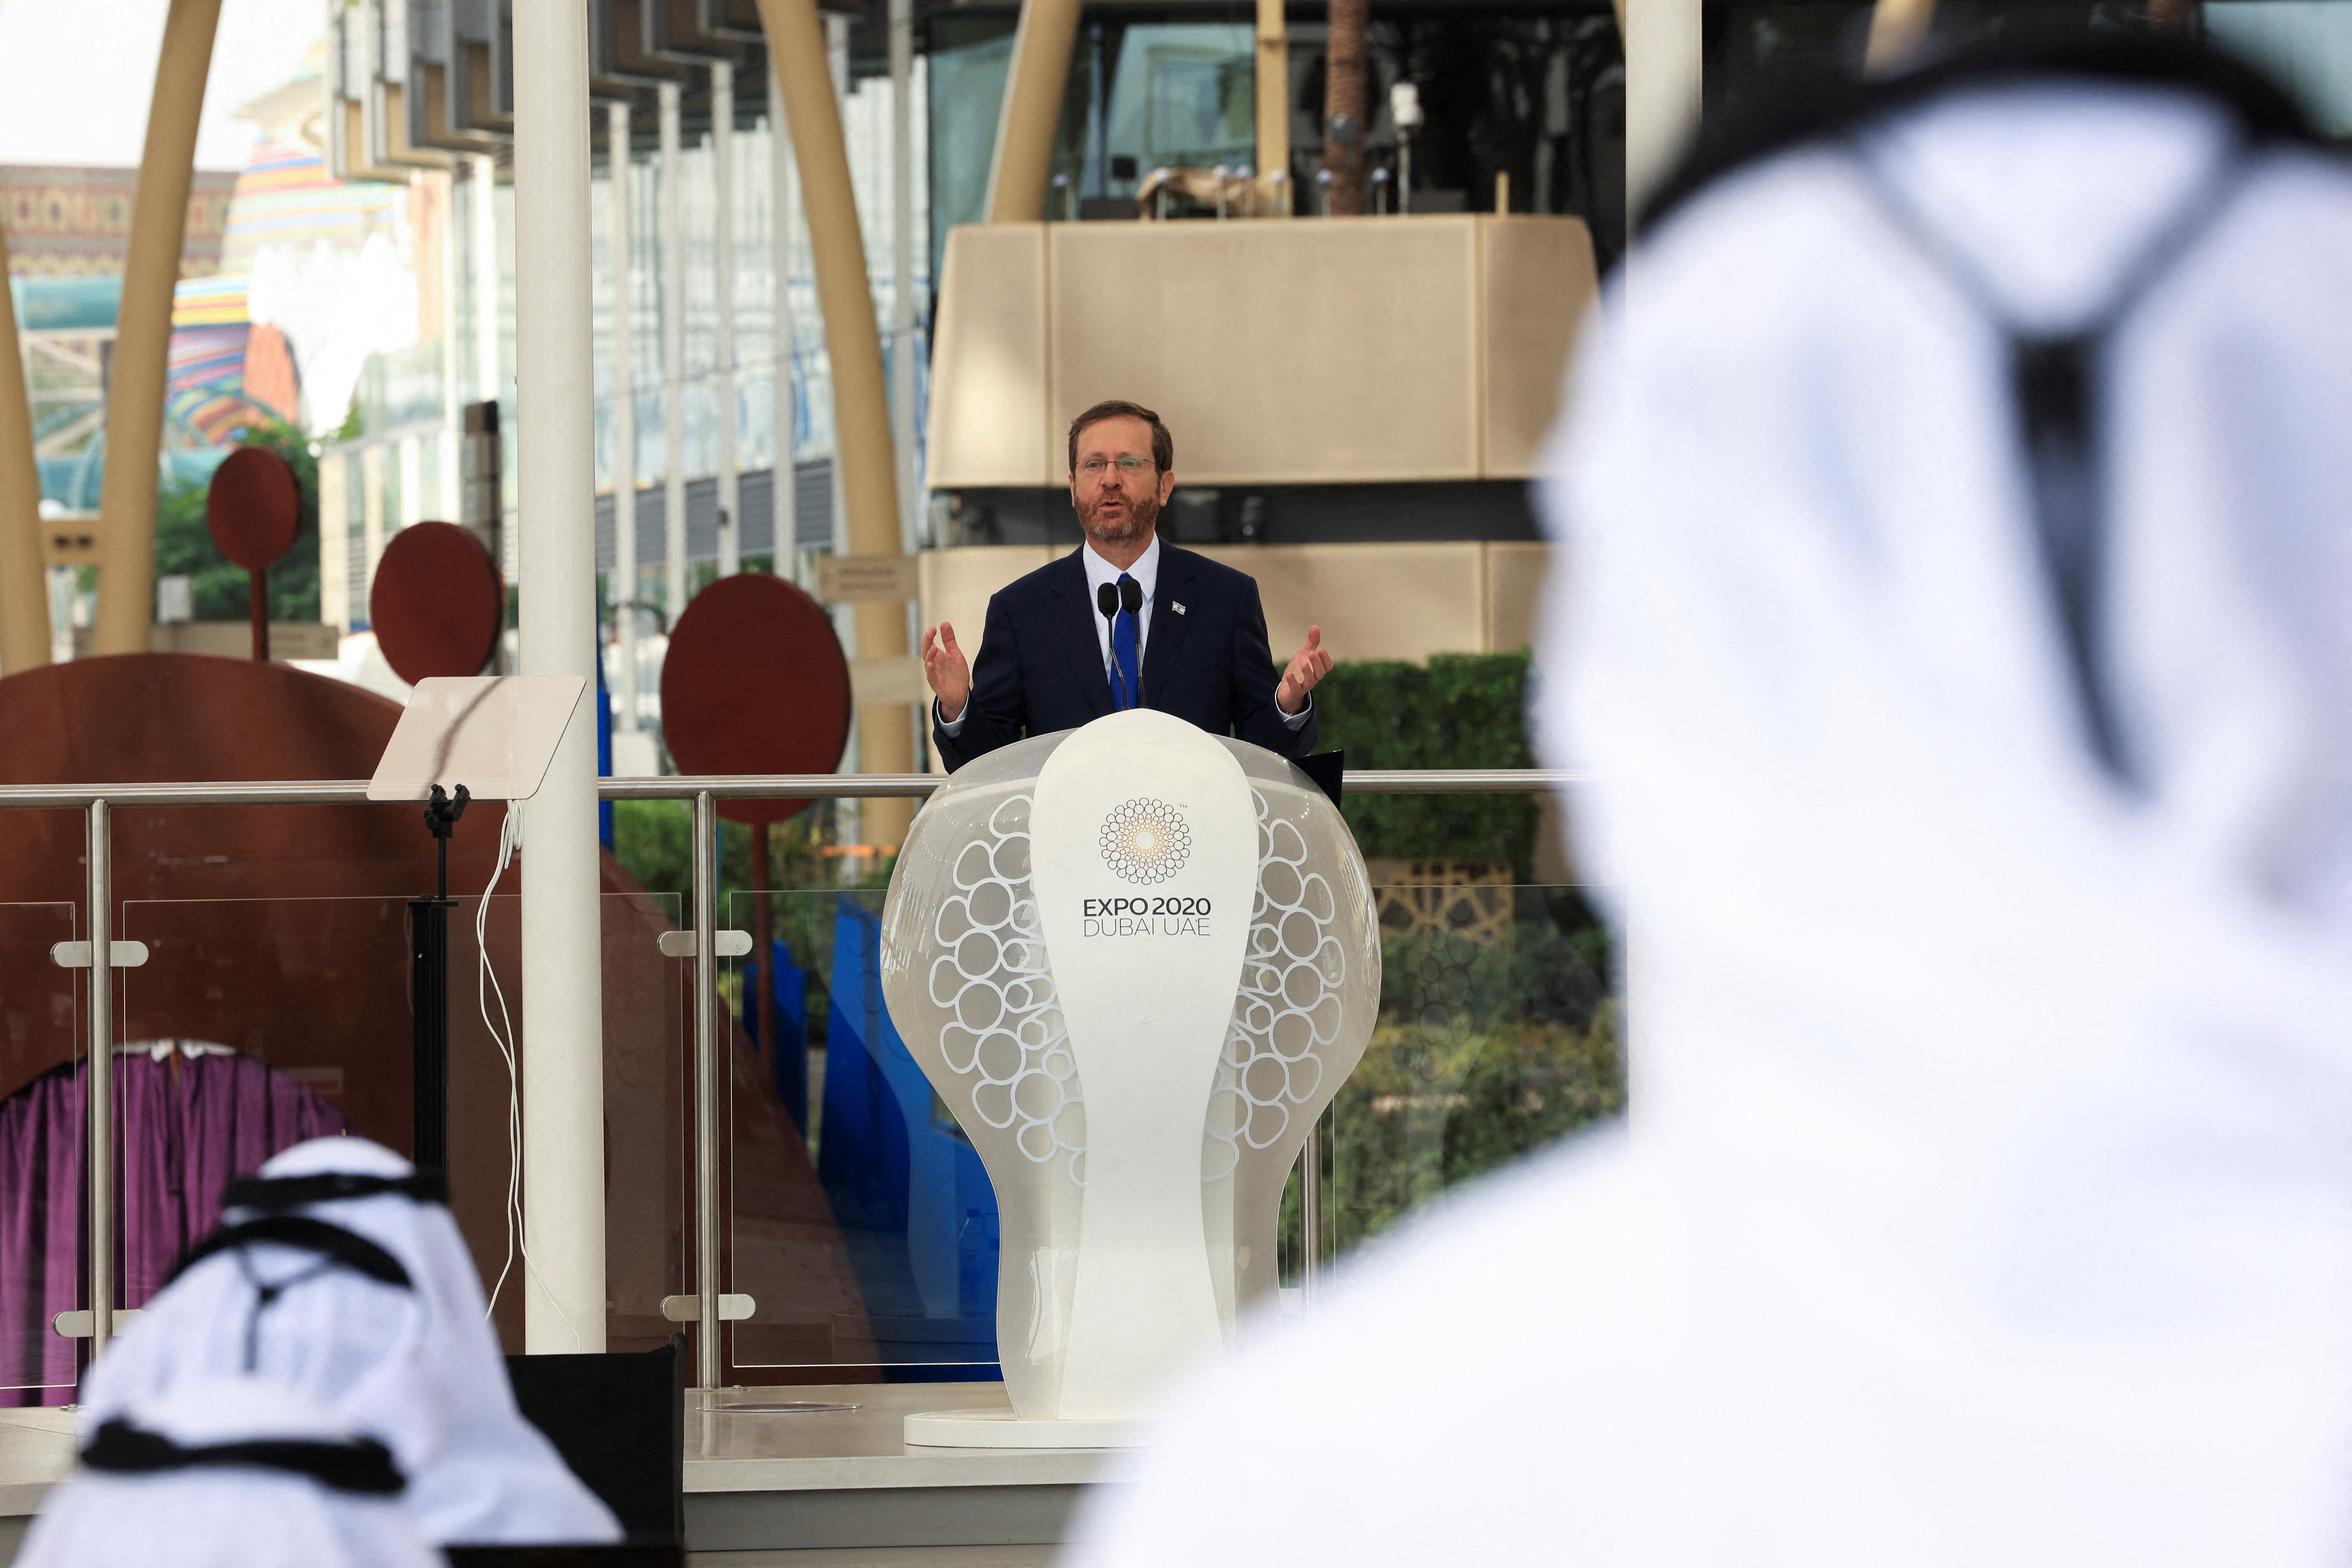 Israeli President Isaac Herzog speaks during Israel's National Day ceremony at Expo 2020 Dubai, in Dubai